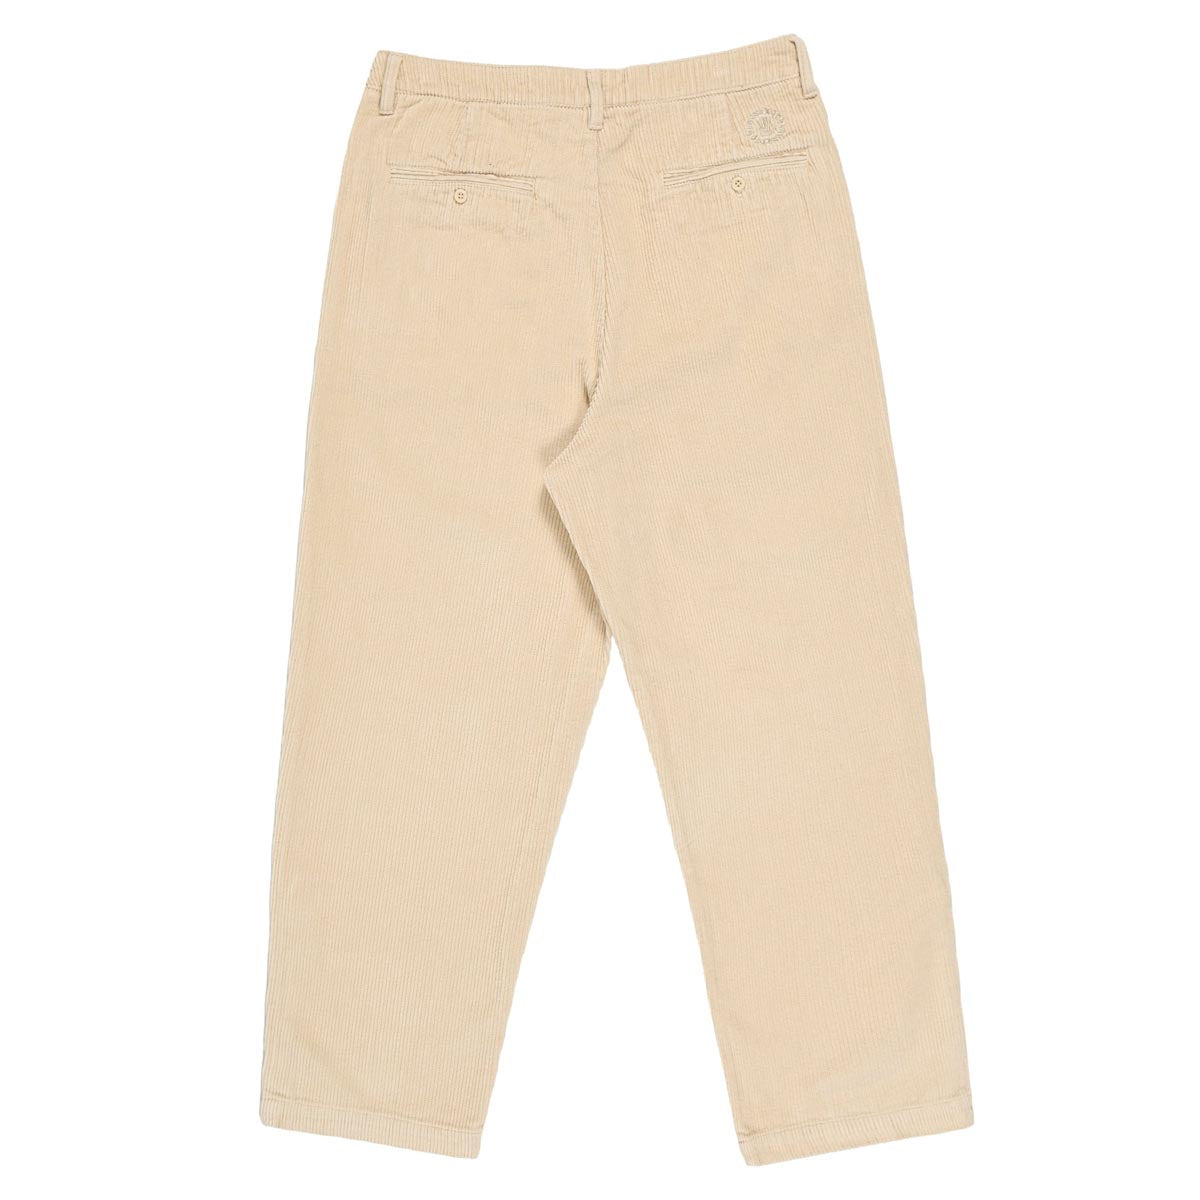 Quasi Elliott Trouser Pants - Limestone image 3